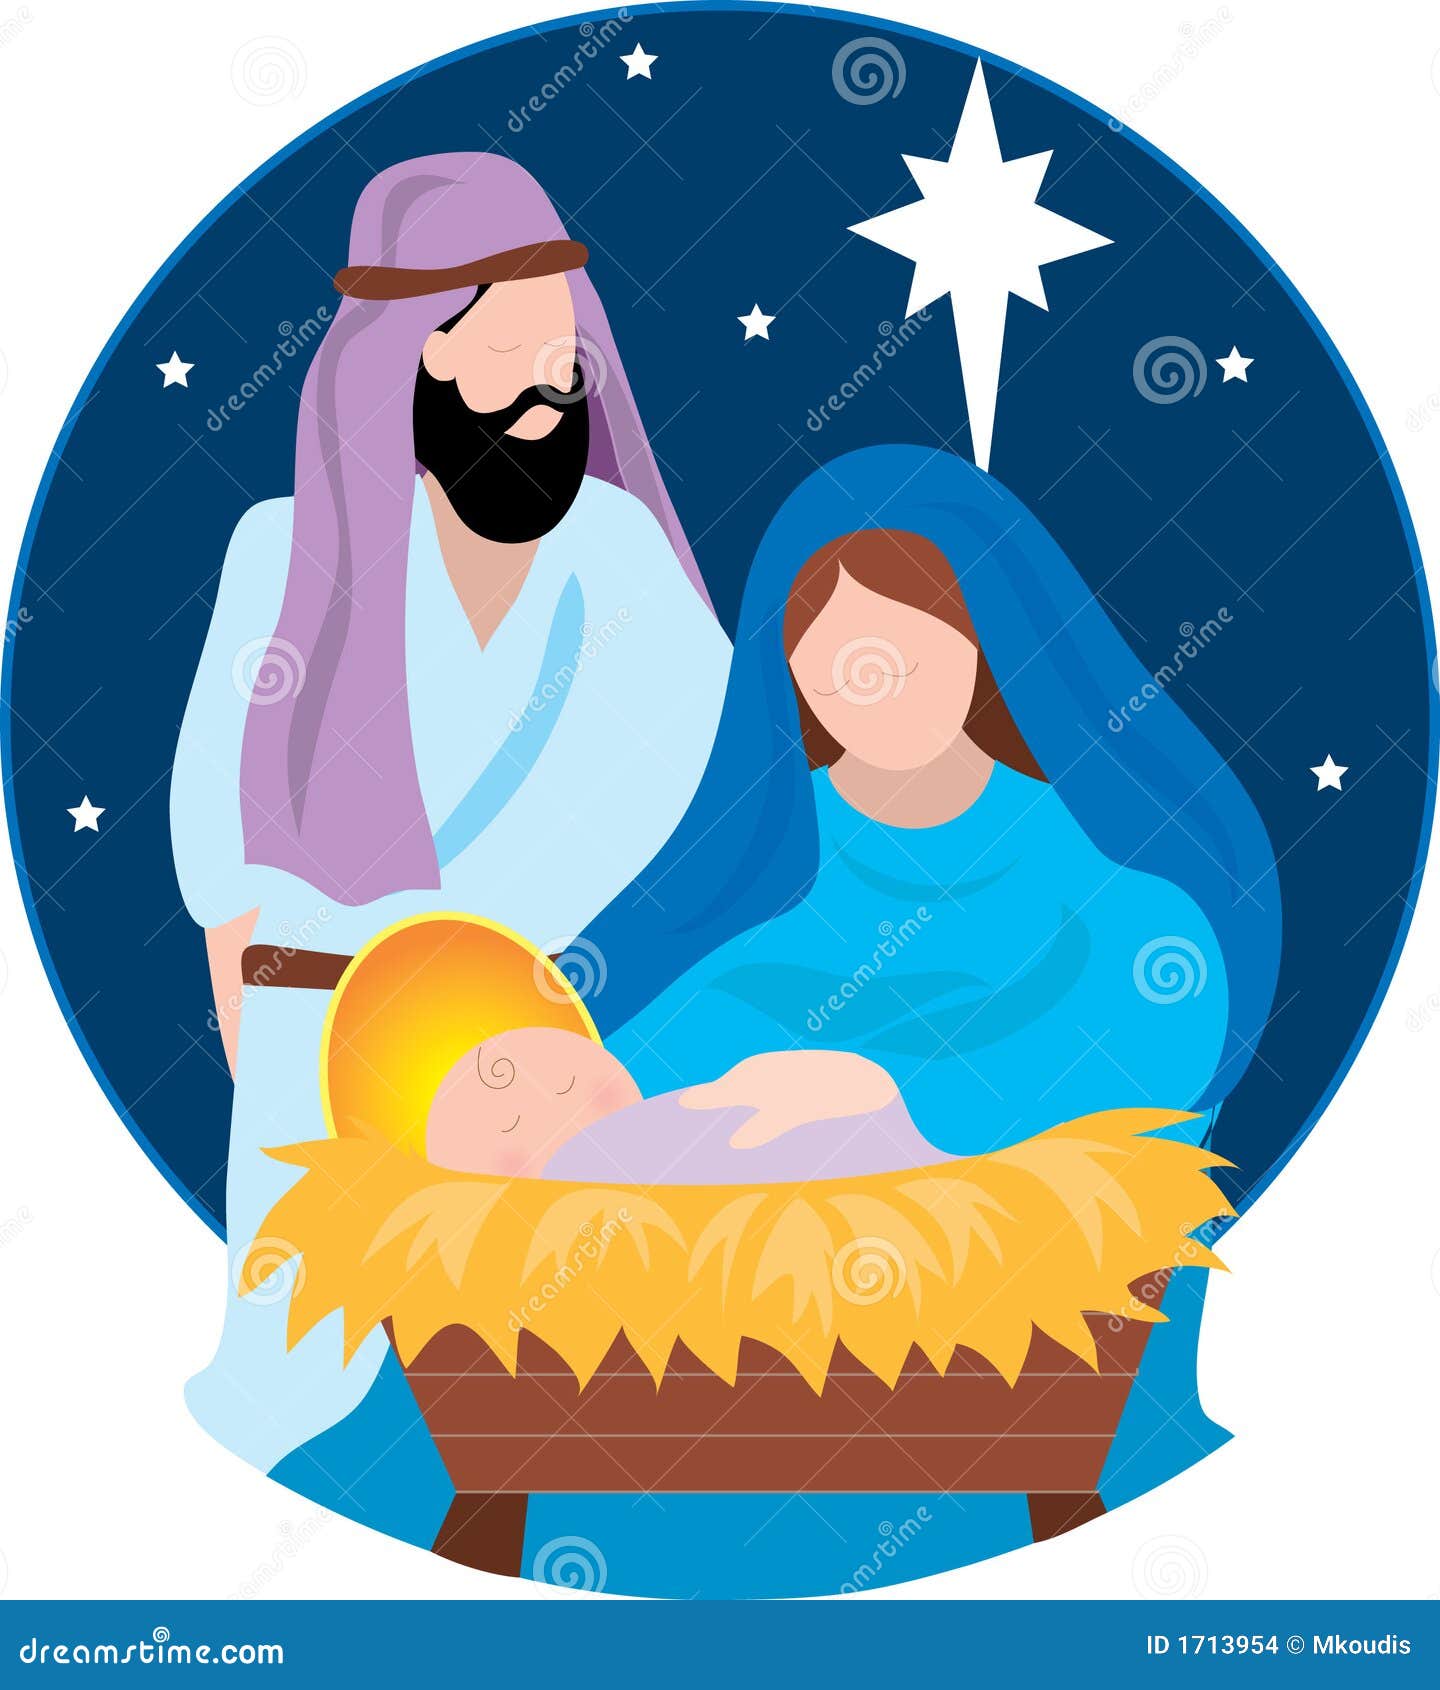 clipart jesus nativity - photo #19